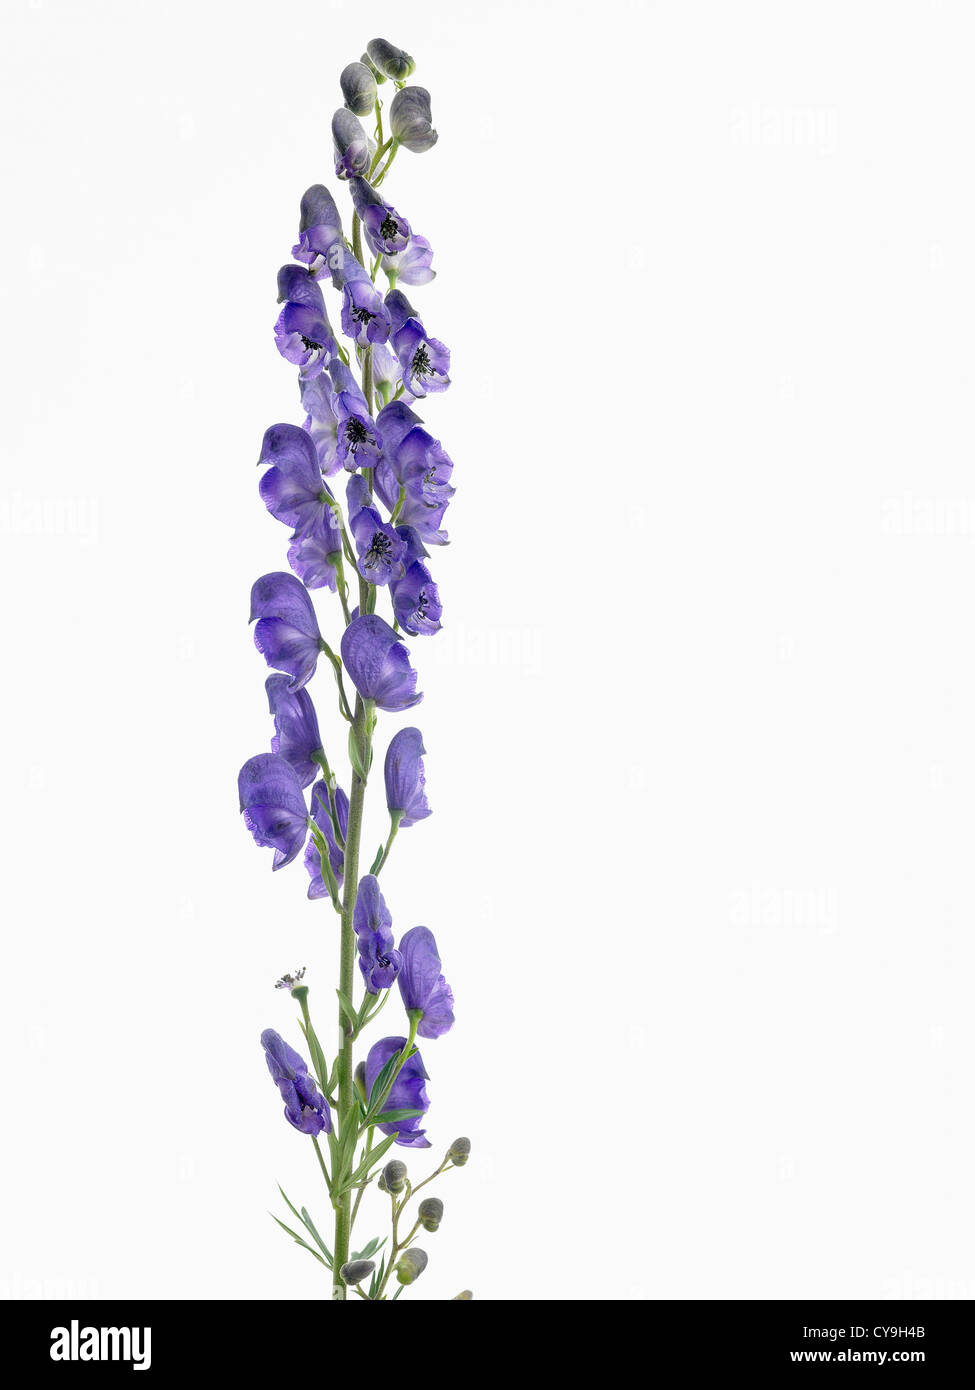 Aconitum napellus, Monk's hood or Monkshood. Abundant blue flowers on a single vertical stem against a white background. Stock Photo